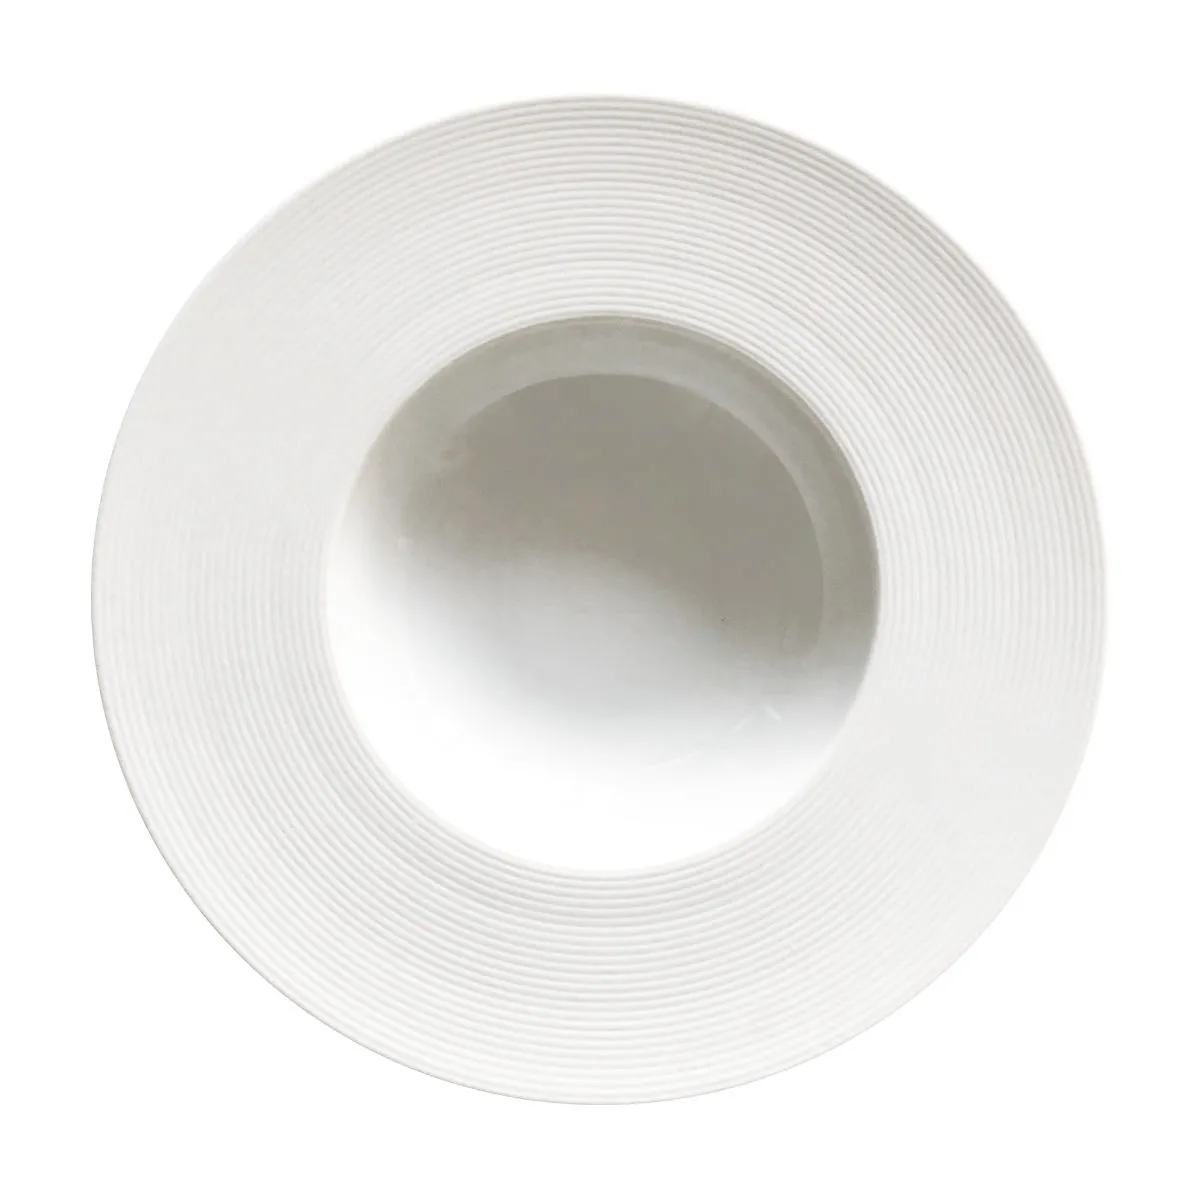 Assiette creuse blanche en porcelaine 23cm - SOLARA - Bruno Evrard